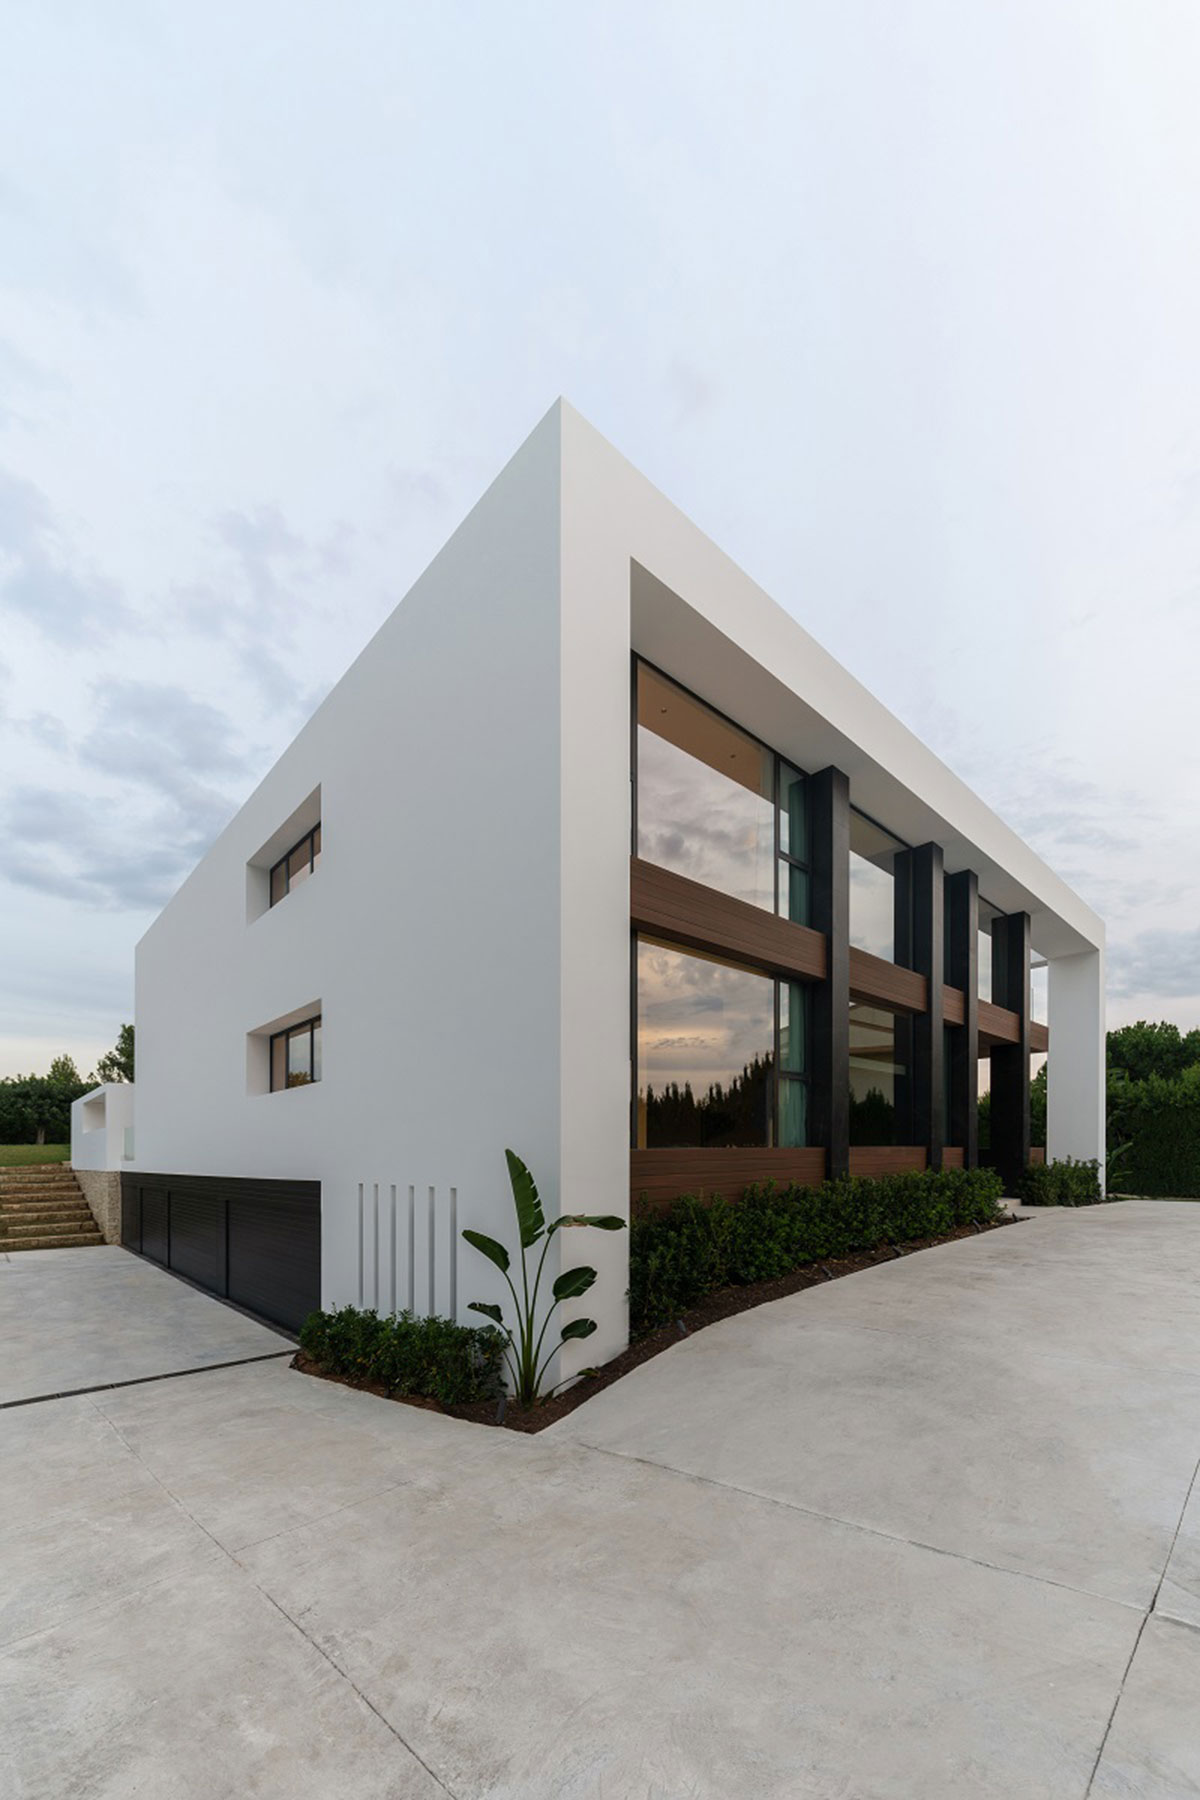 Casa Cruz | Rubén Muedra Estudio de Arquitectura